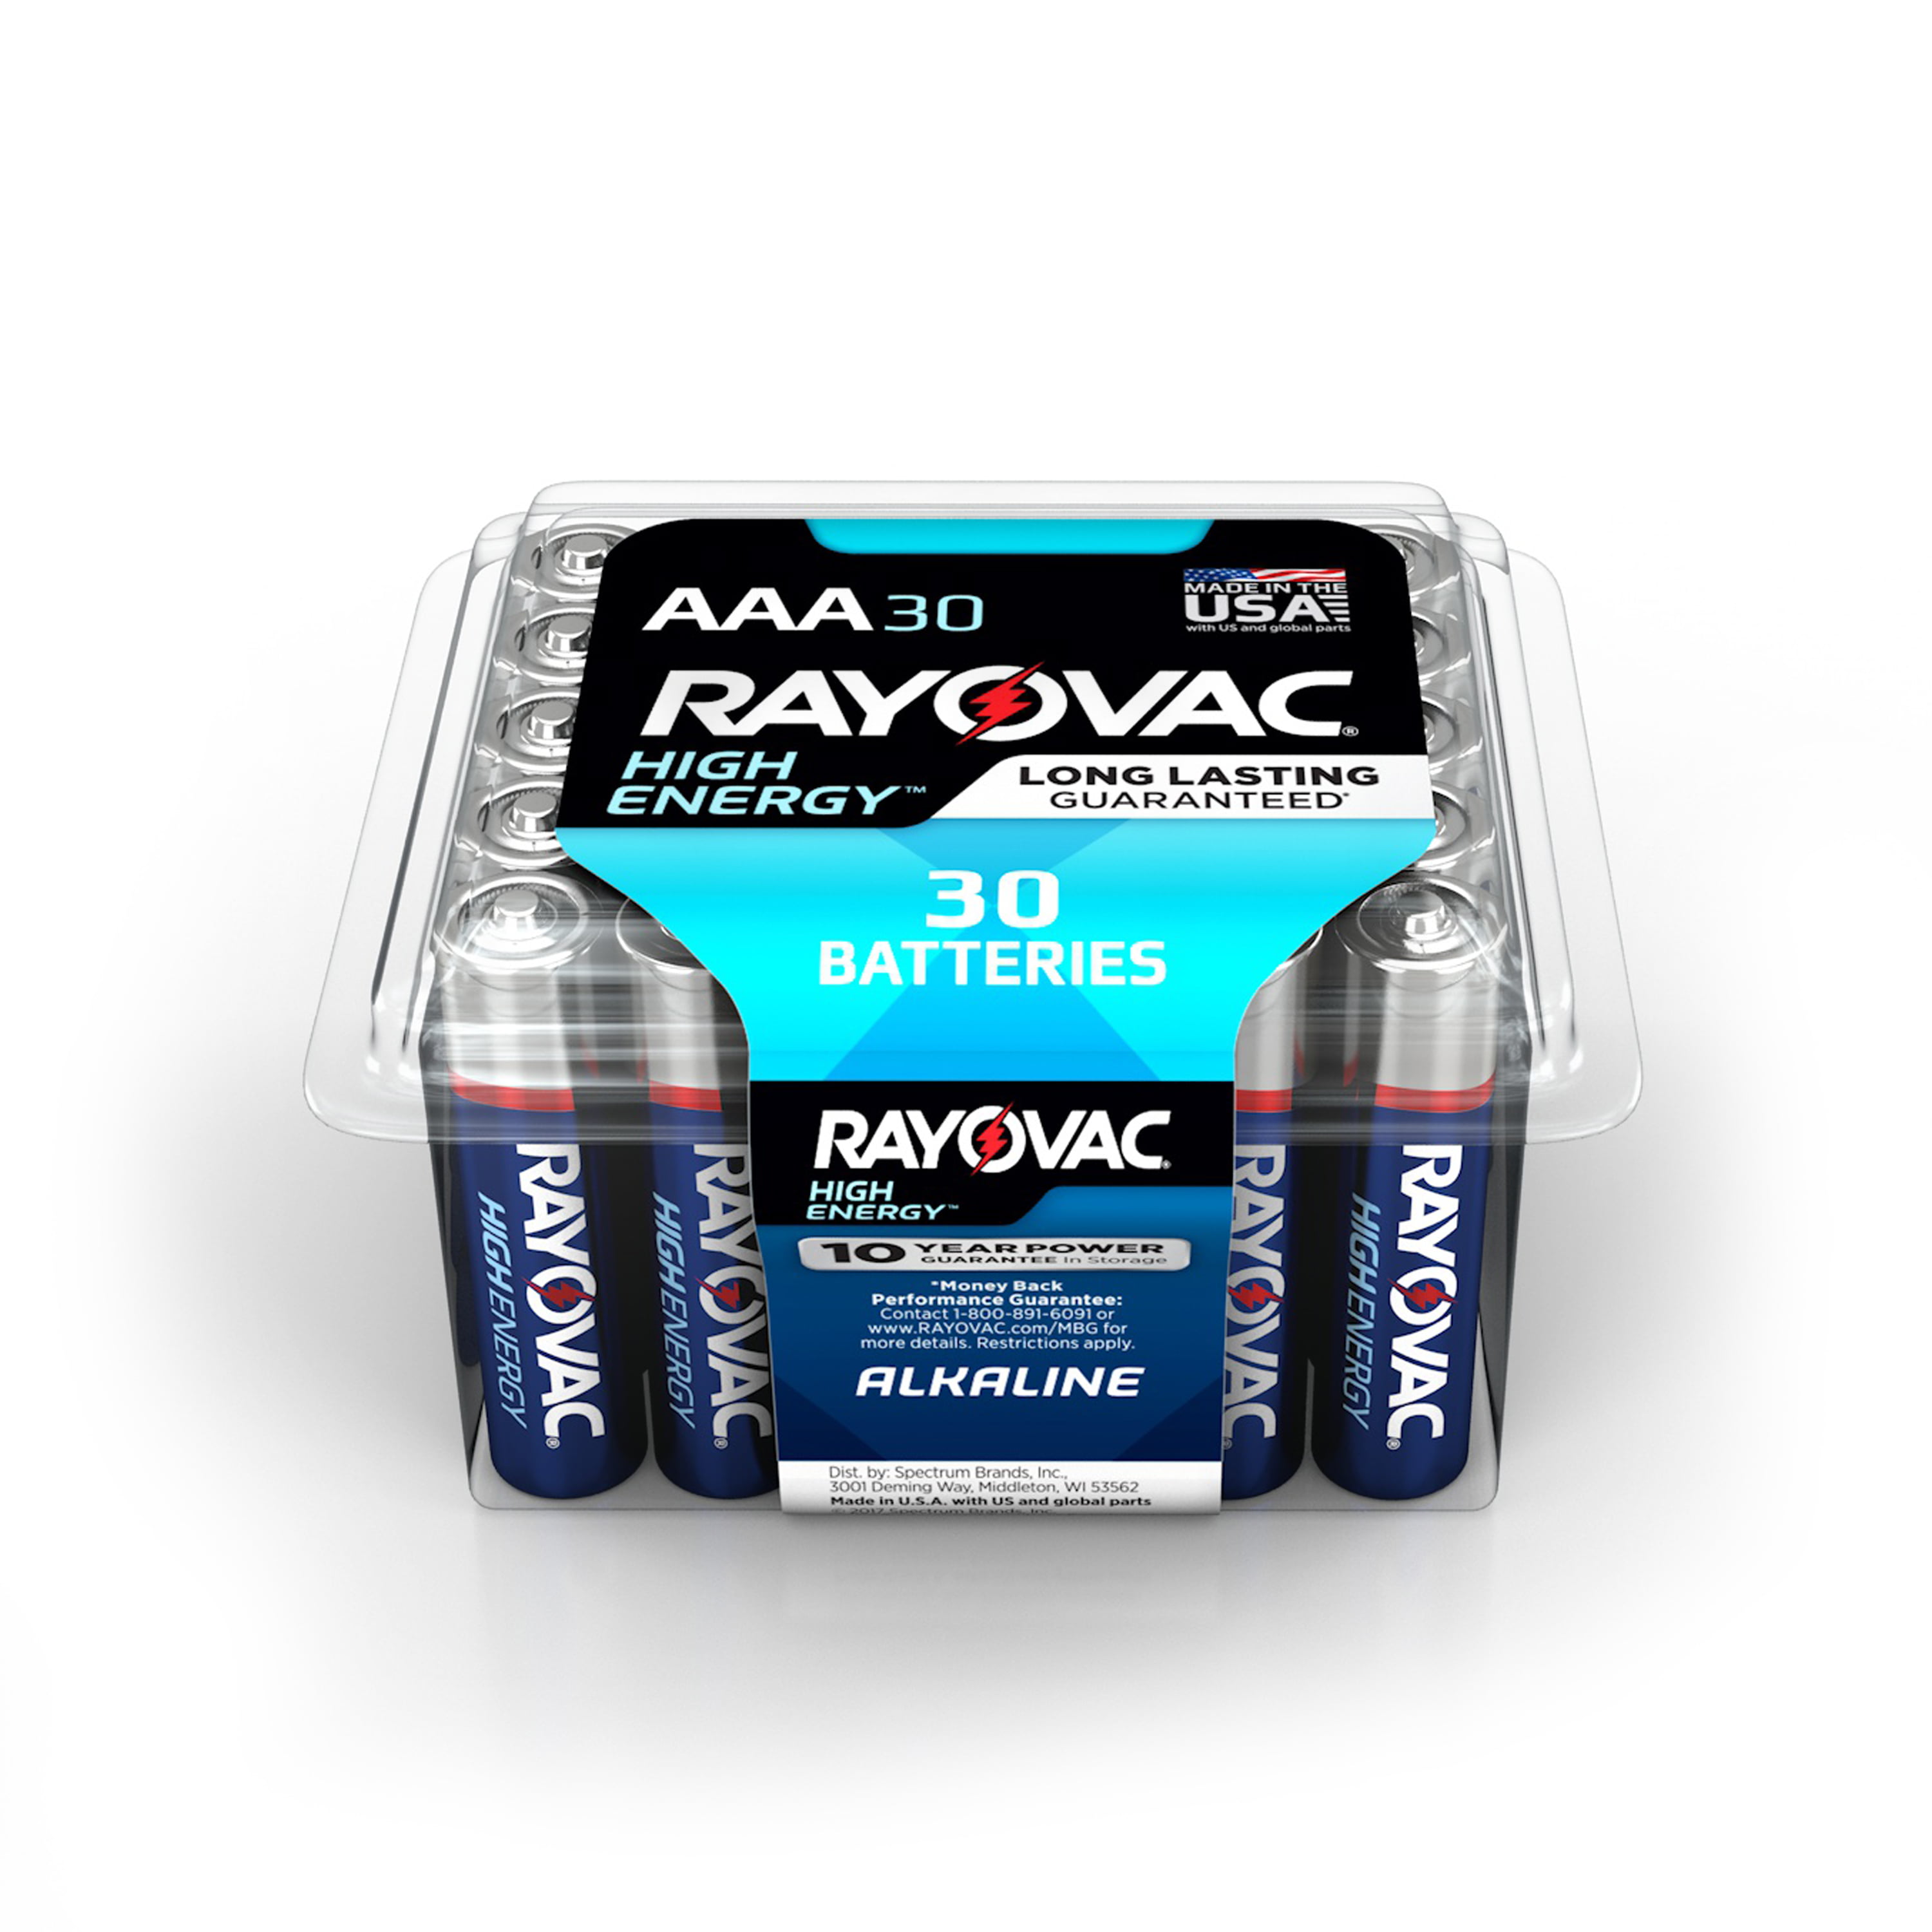 Rayovac High Energy Alkaline Aaa Batteries 30 Count